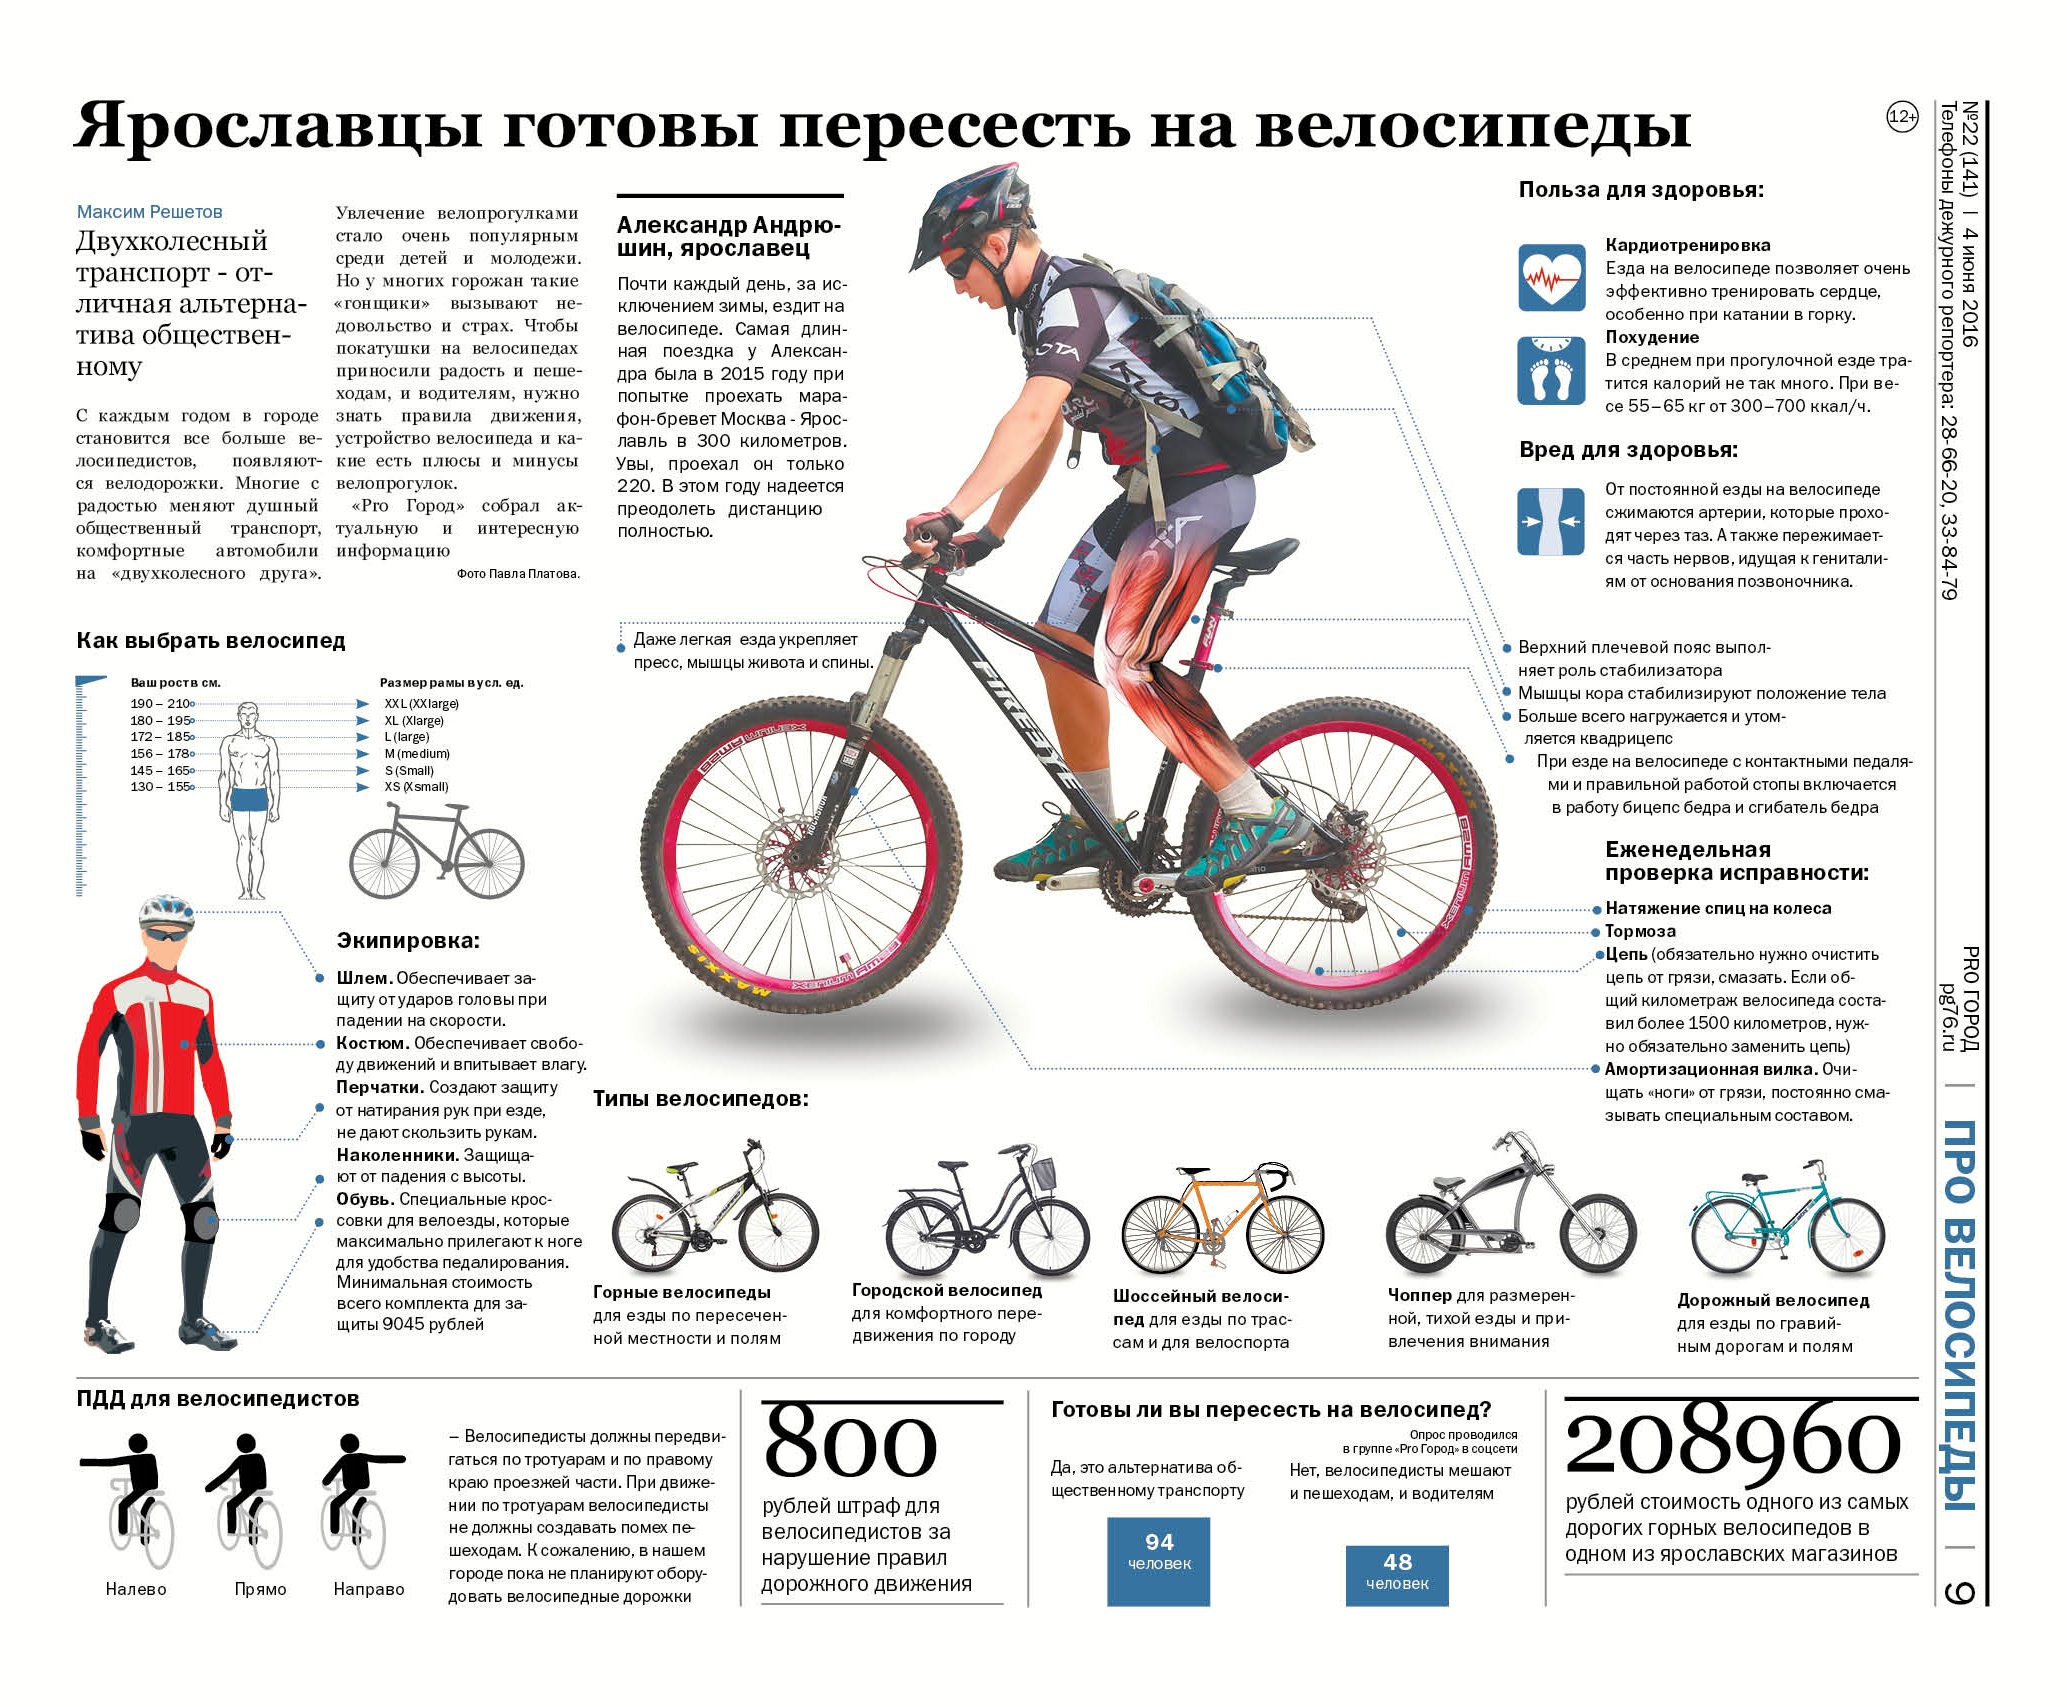 У каждого велосипеда по 2 колеса. Инфографика велосипед. Польза велосипеда. Преимущества велосипеда. Инфографика езда на велосипеде.